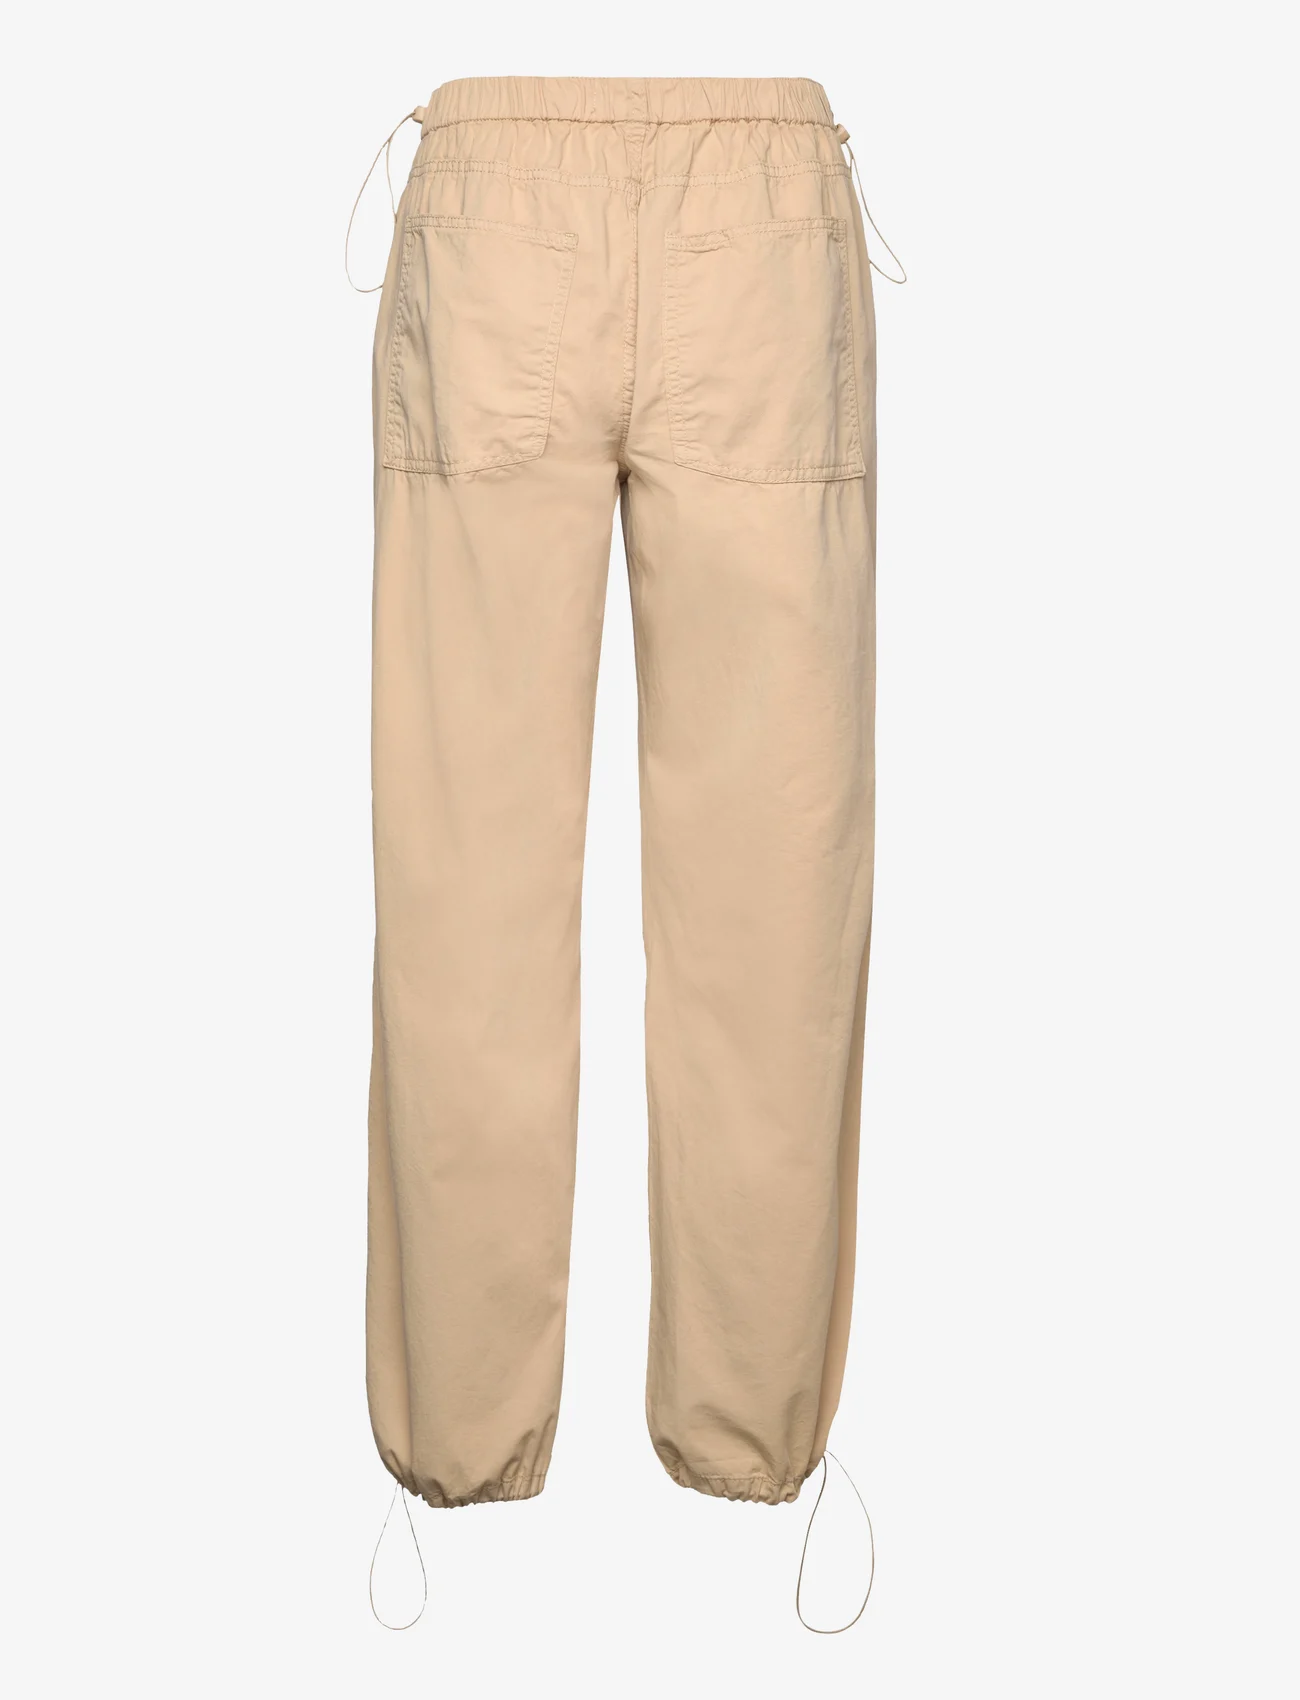 Mango - Parachute trousers - joggersit - light beige - 1